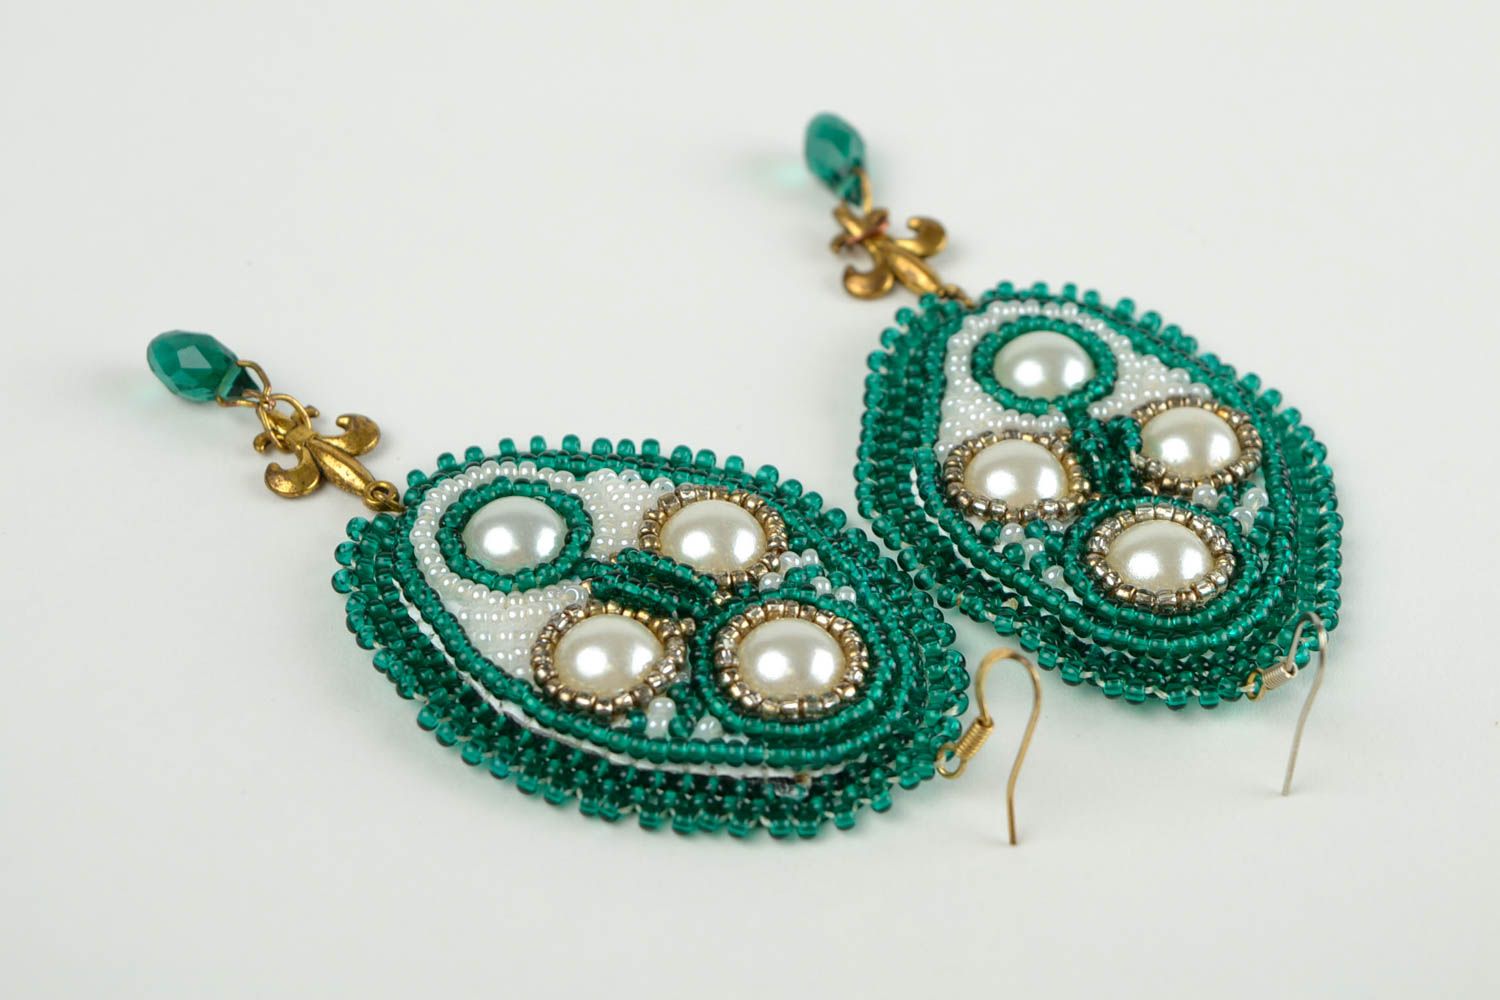 Beautiful handmade beaded earrings beautiful jewellery unusual gifts for her photo 4